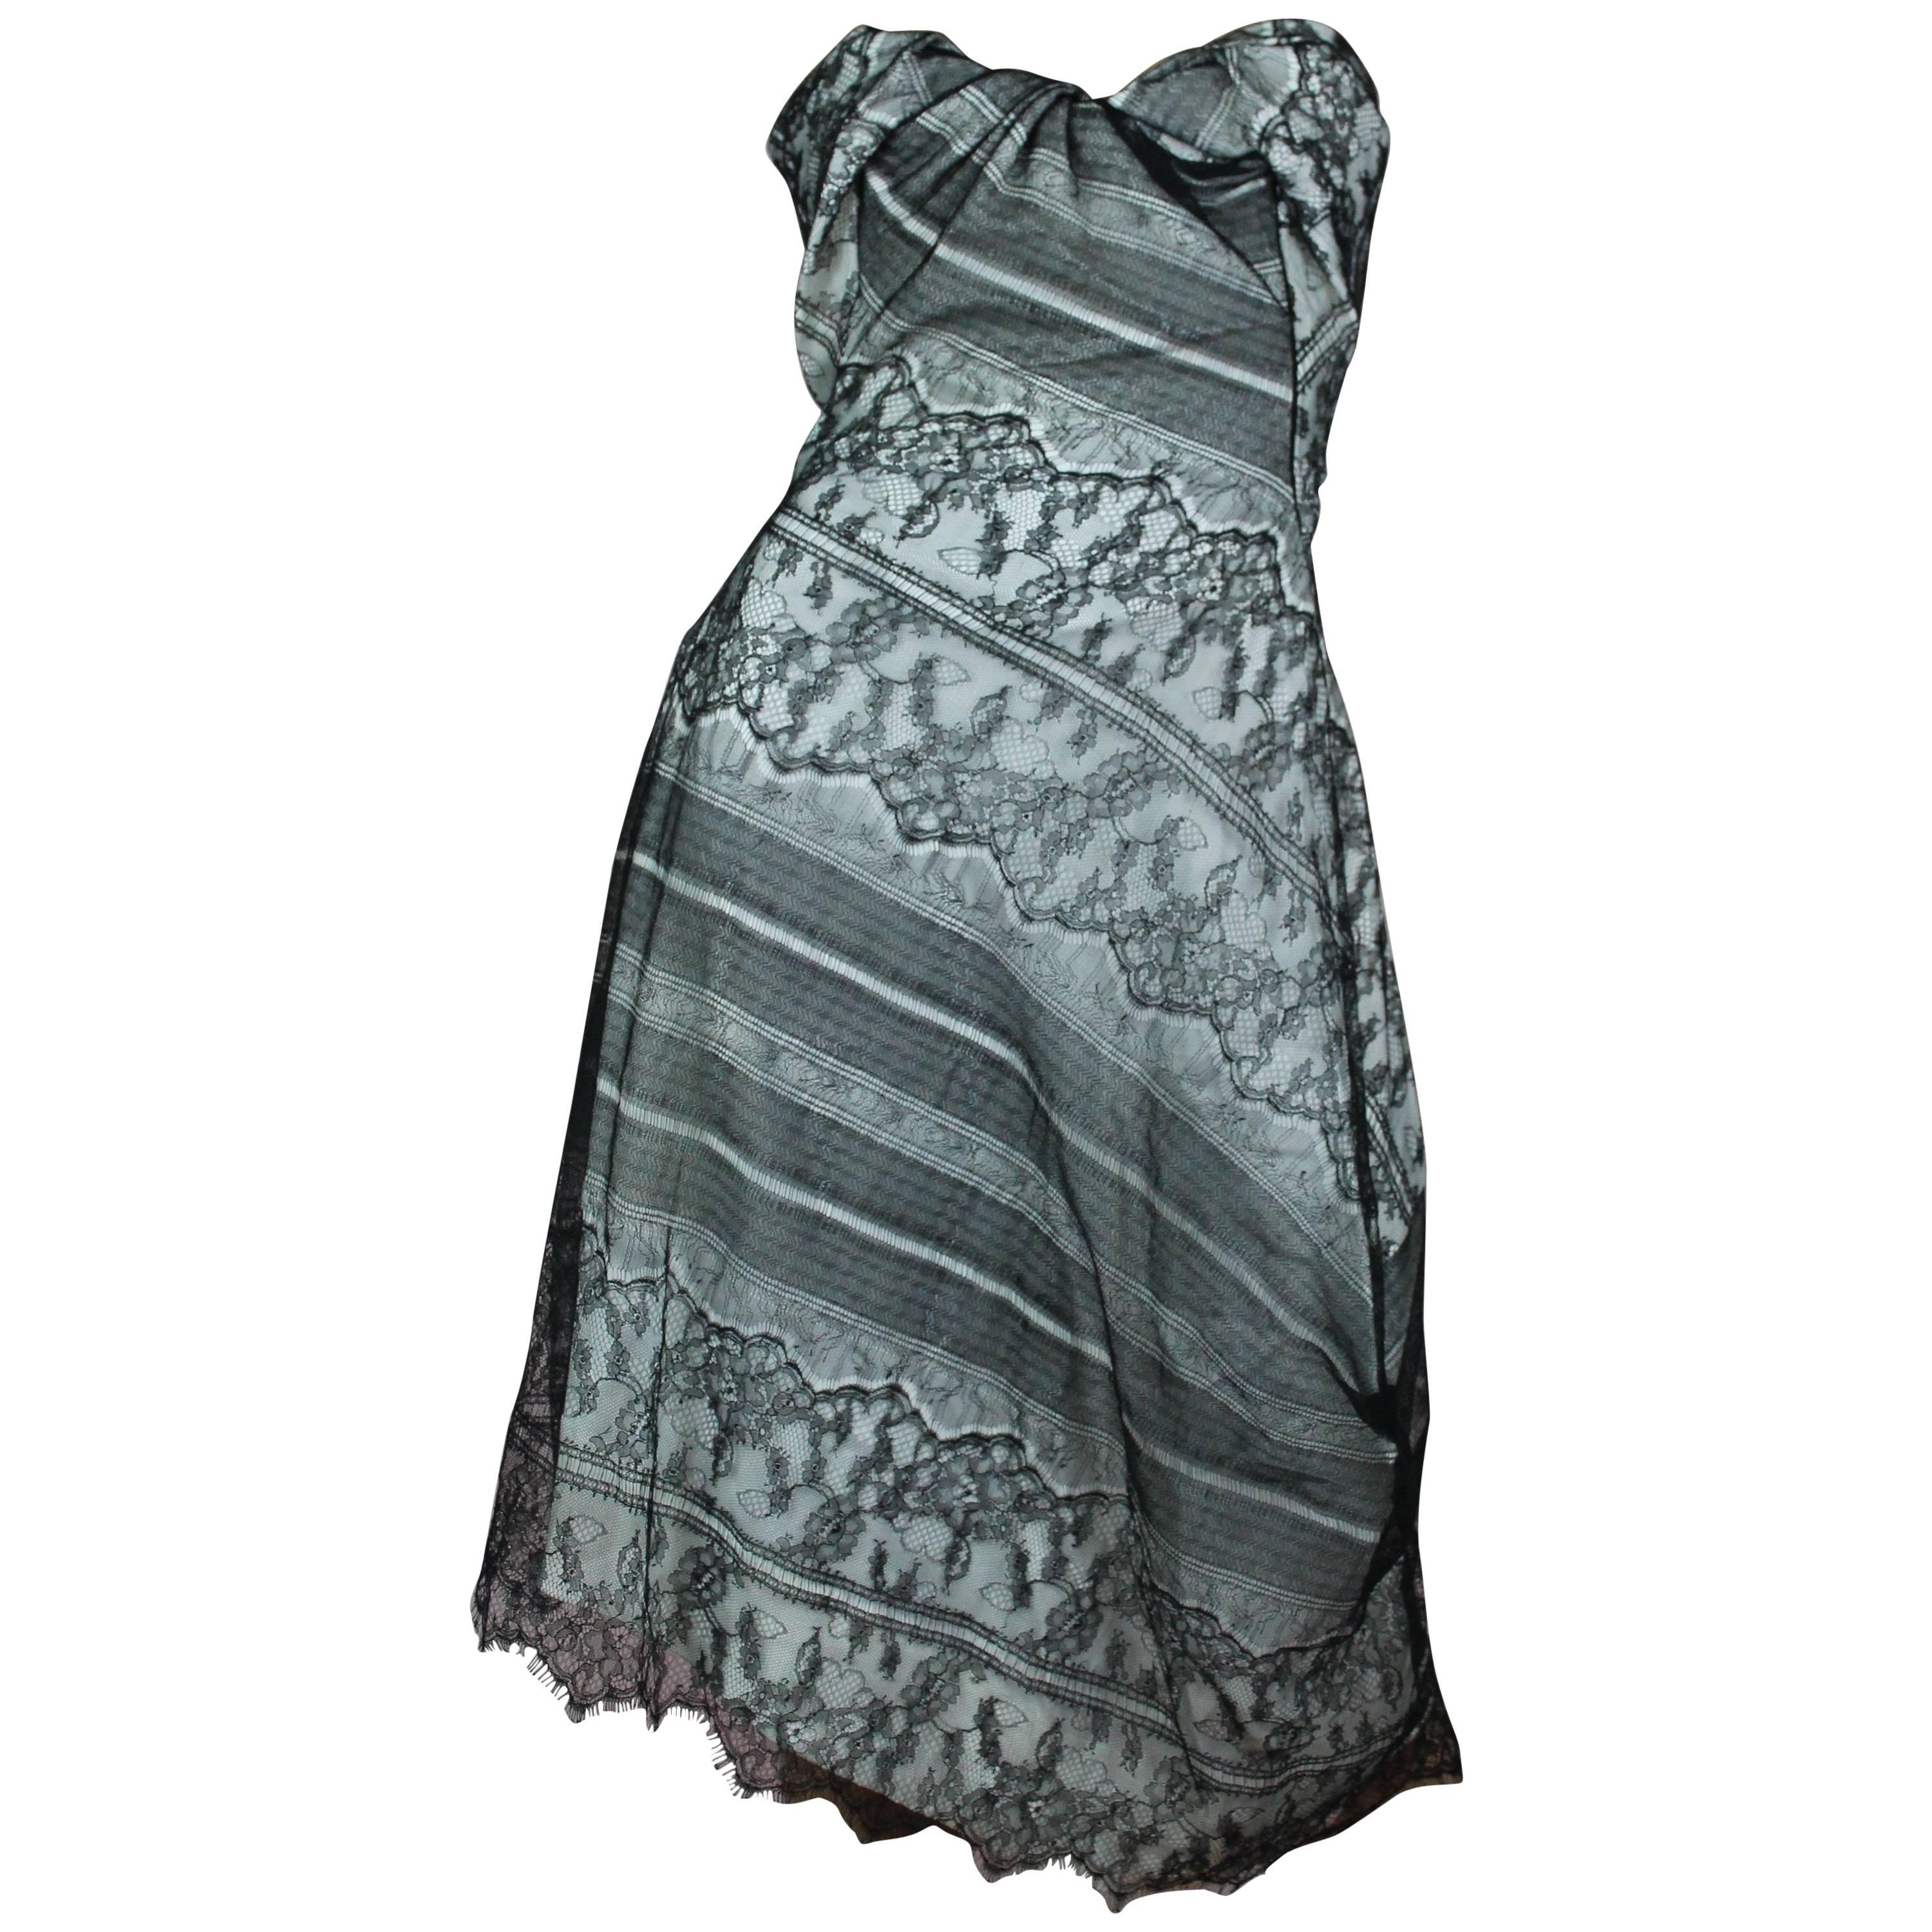 Vivienne Westwood Gold Label "Paper Bag Dress" in Black Lace Size IT 40 / US 4